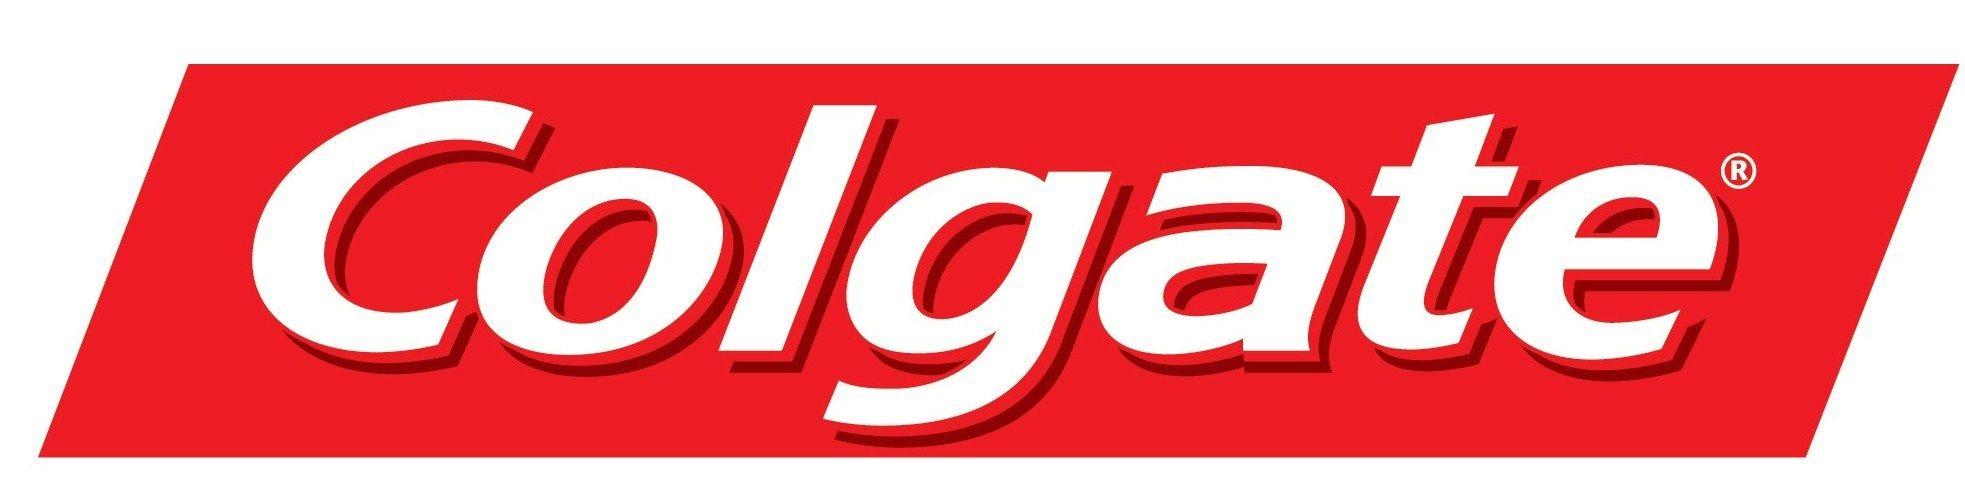 Colgate Logo - logos. Logos, Famous logos, Logo design